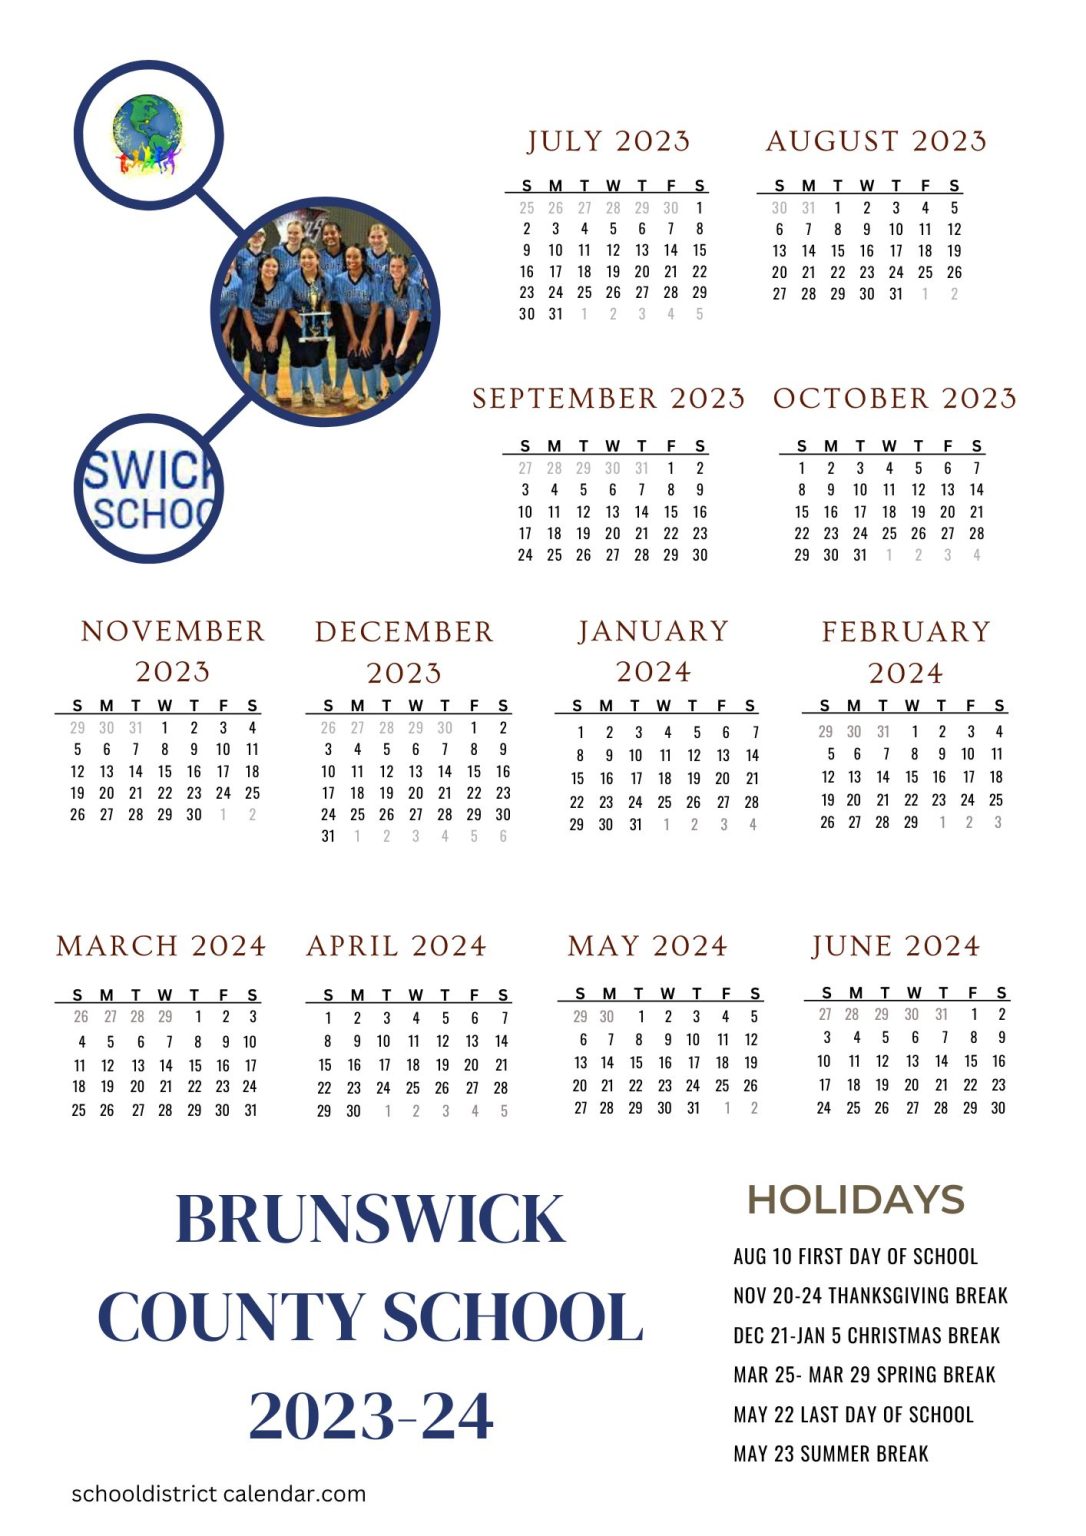 brunswick-county-schools-calendar-holidays-2023-2024